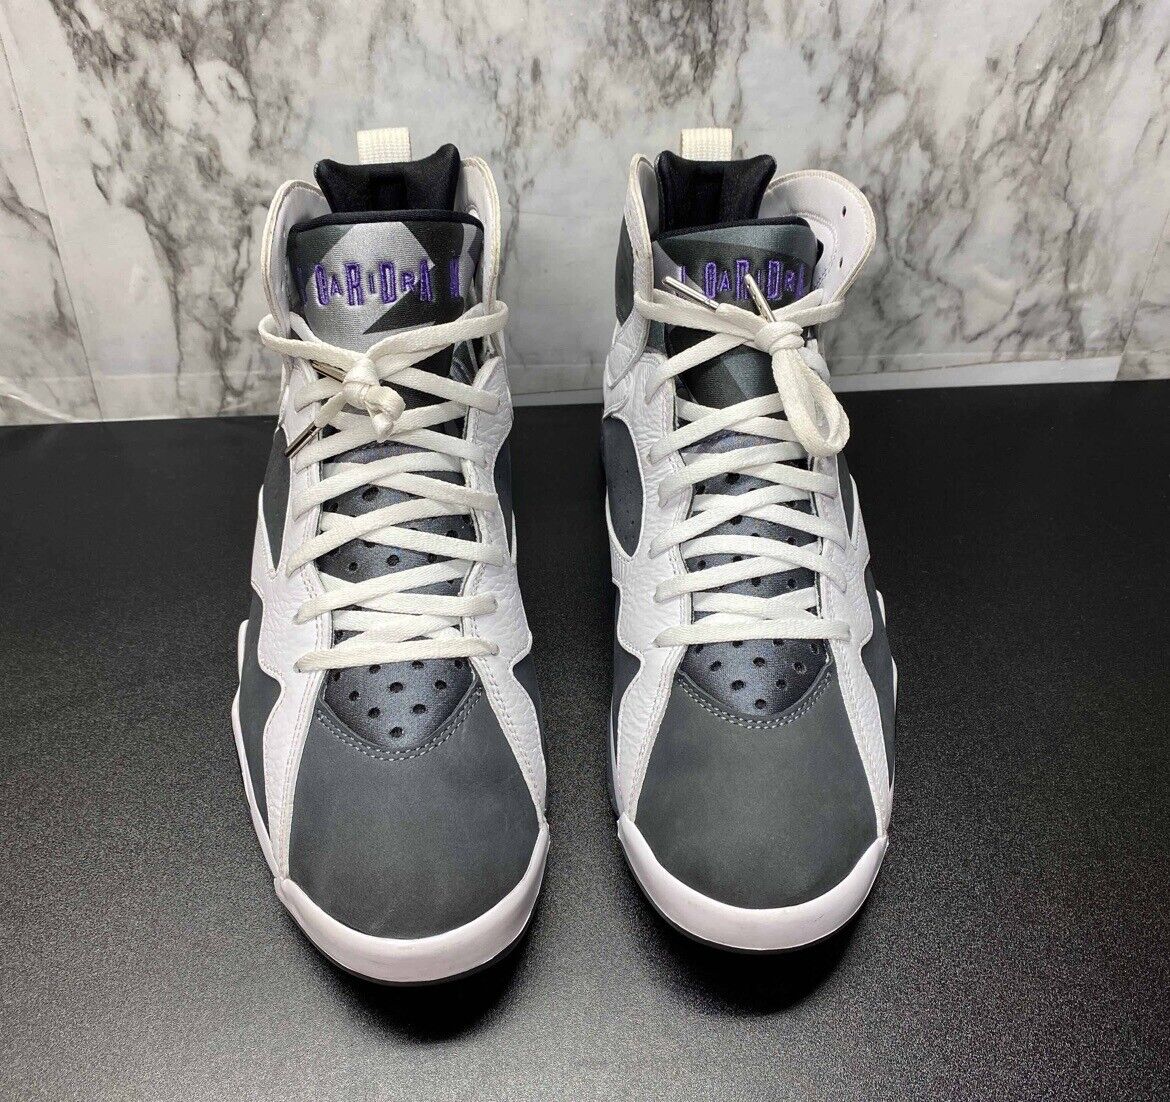 Nike Air Jordan Retro 7 Flint Grey White CU9307-100 Mens Used Size 10.5 VNDS